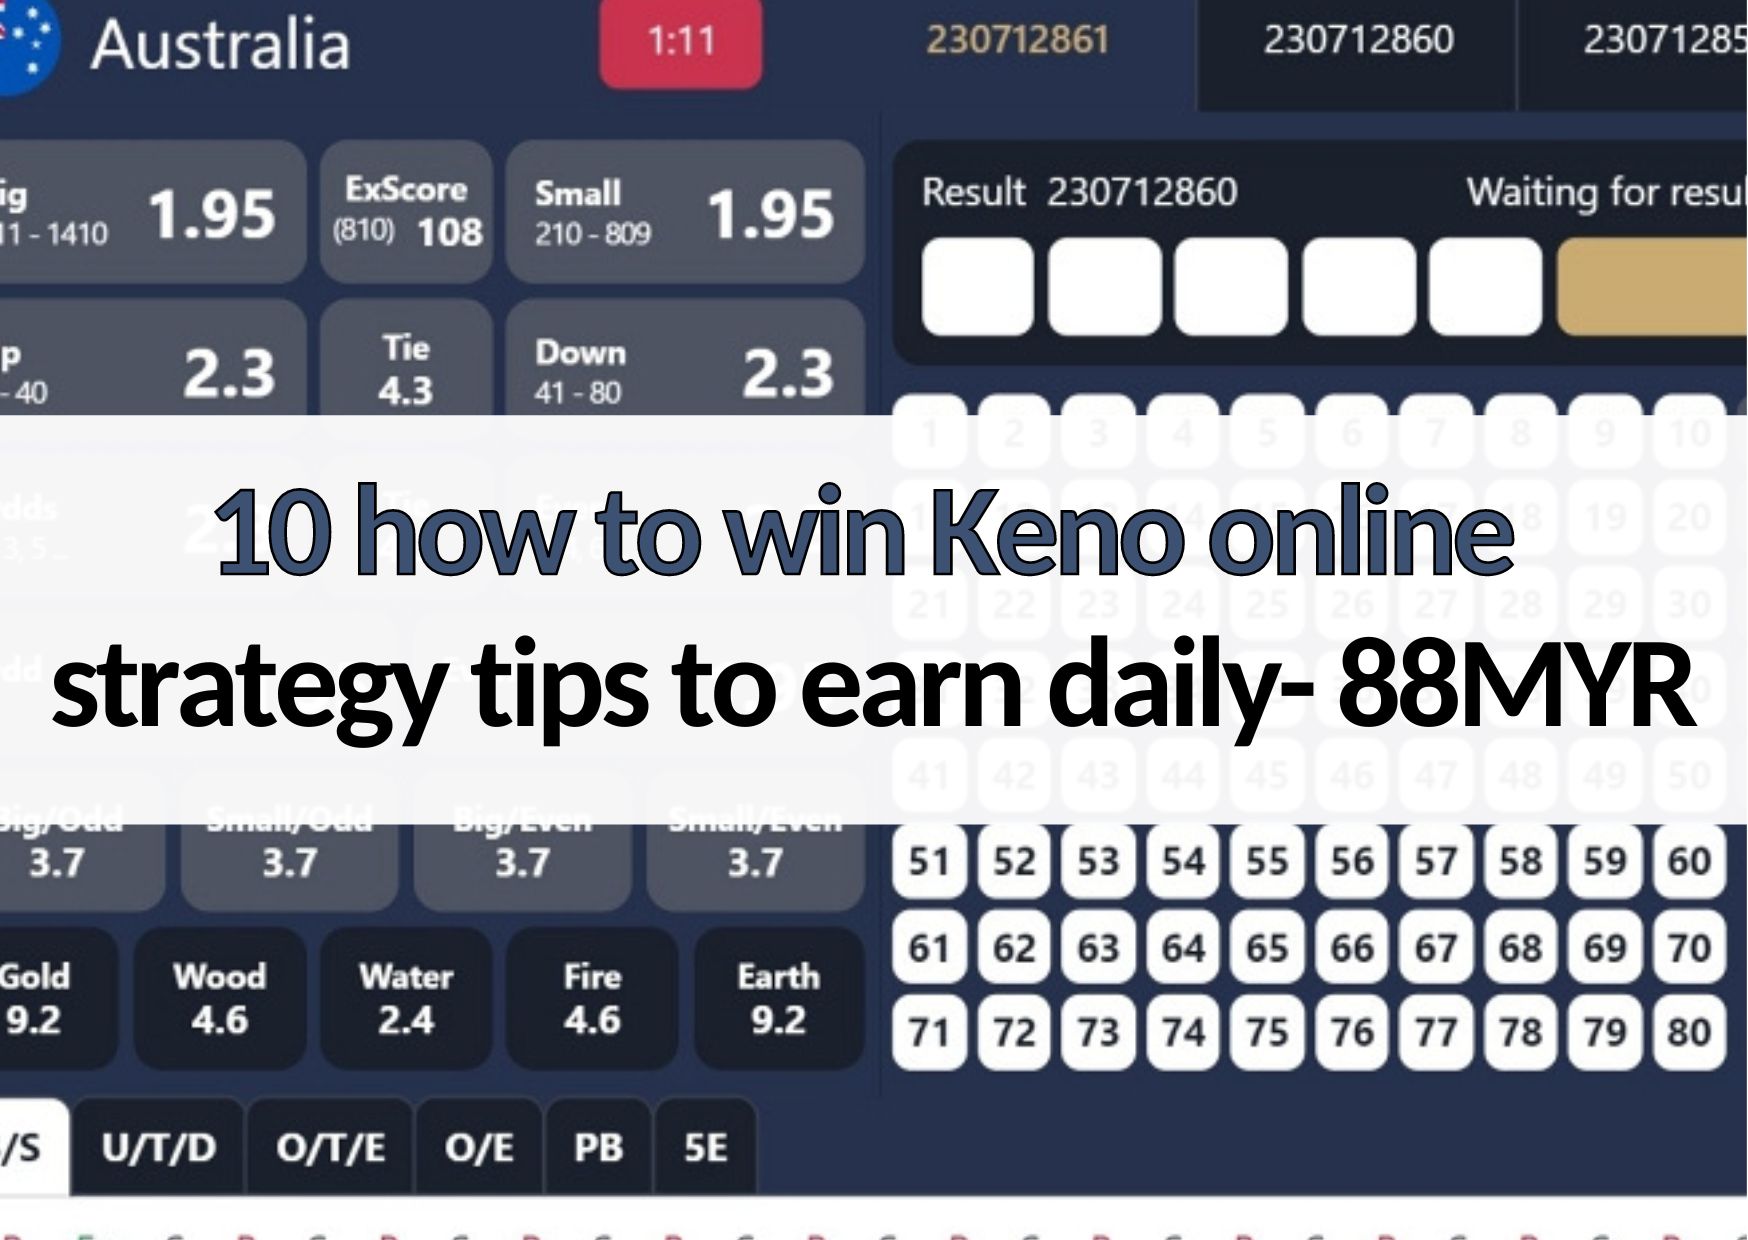 10 how to win Keno online strategies